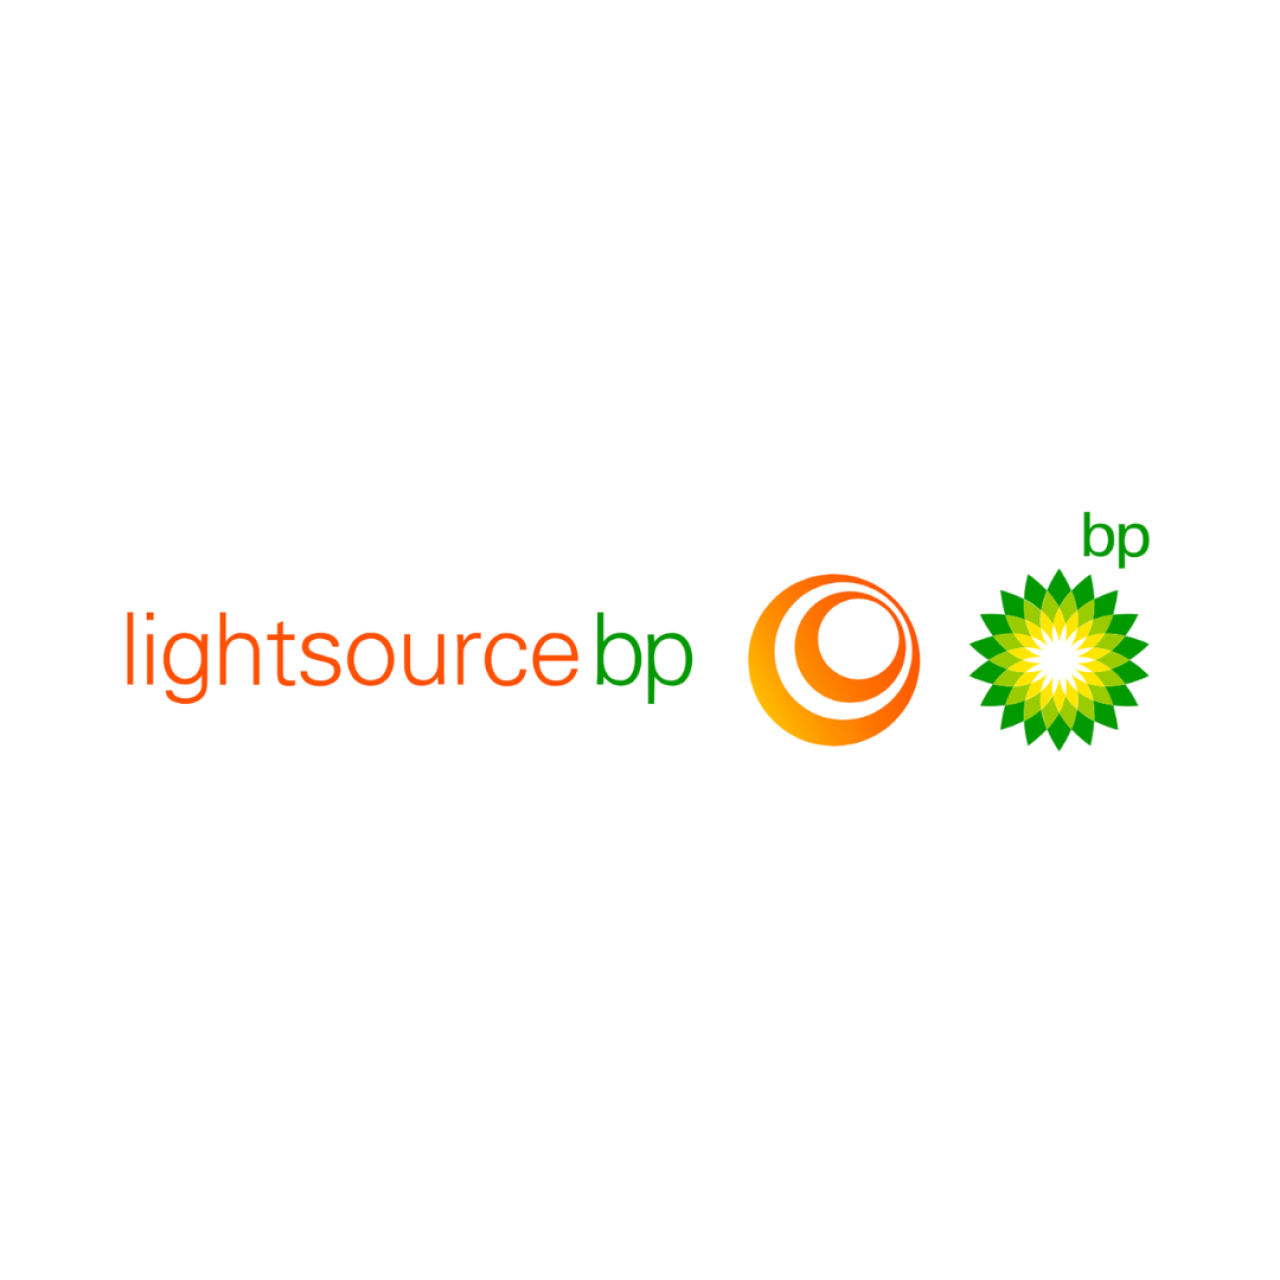 Lightsource bp enhance end-user experience and strengthen business model.